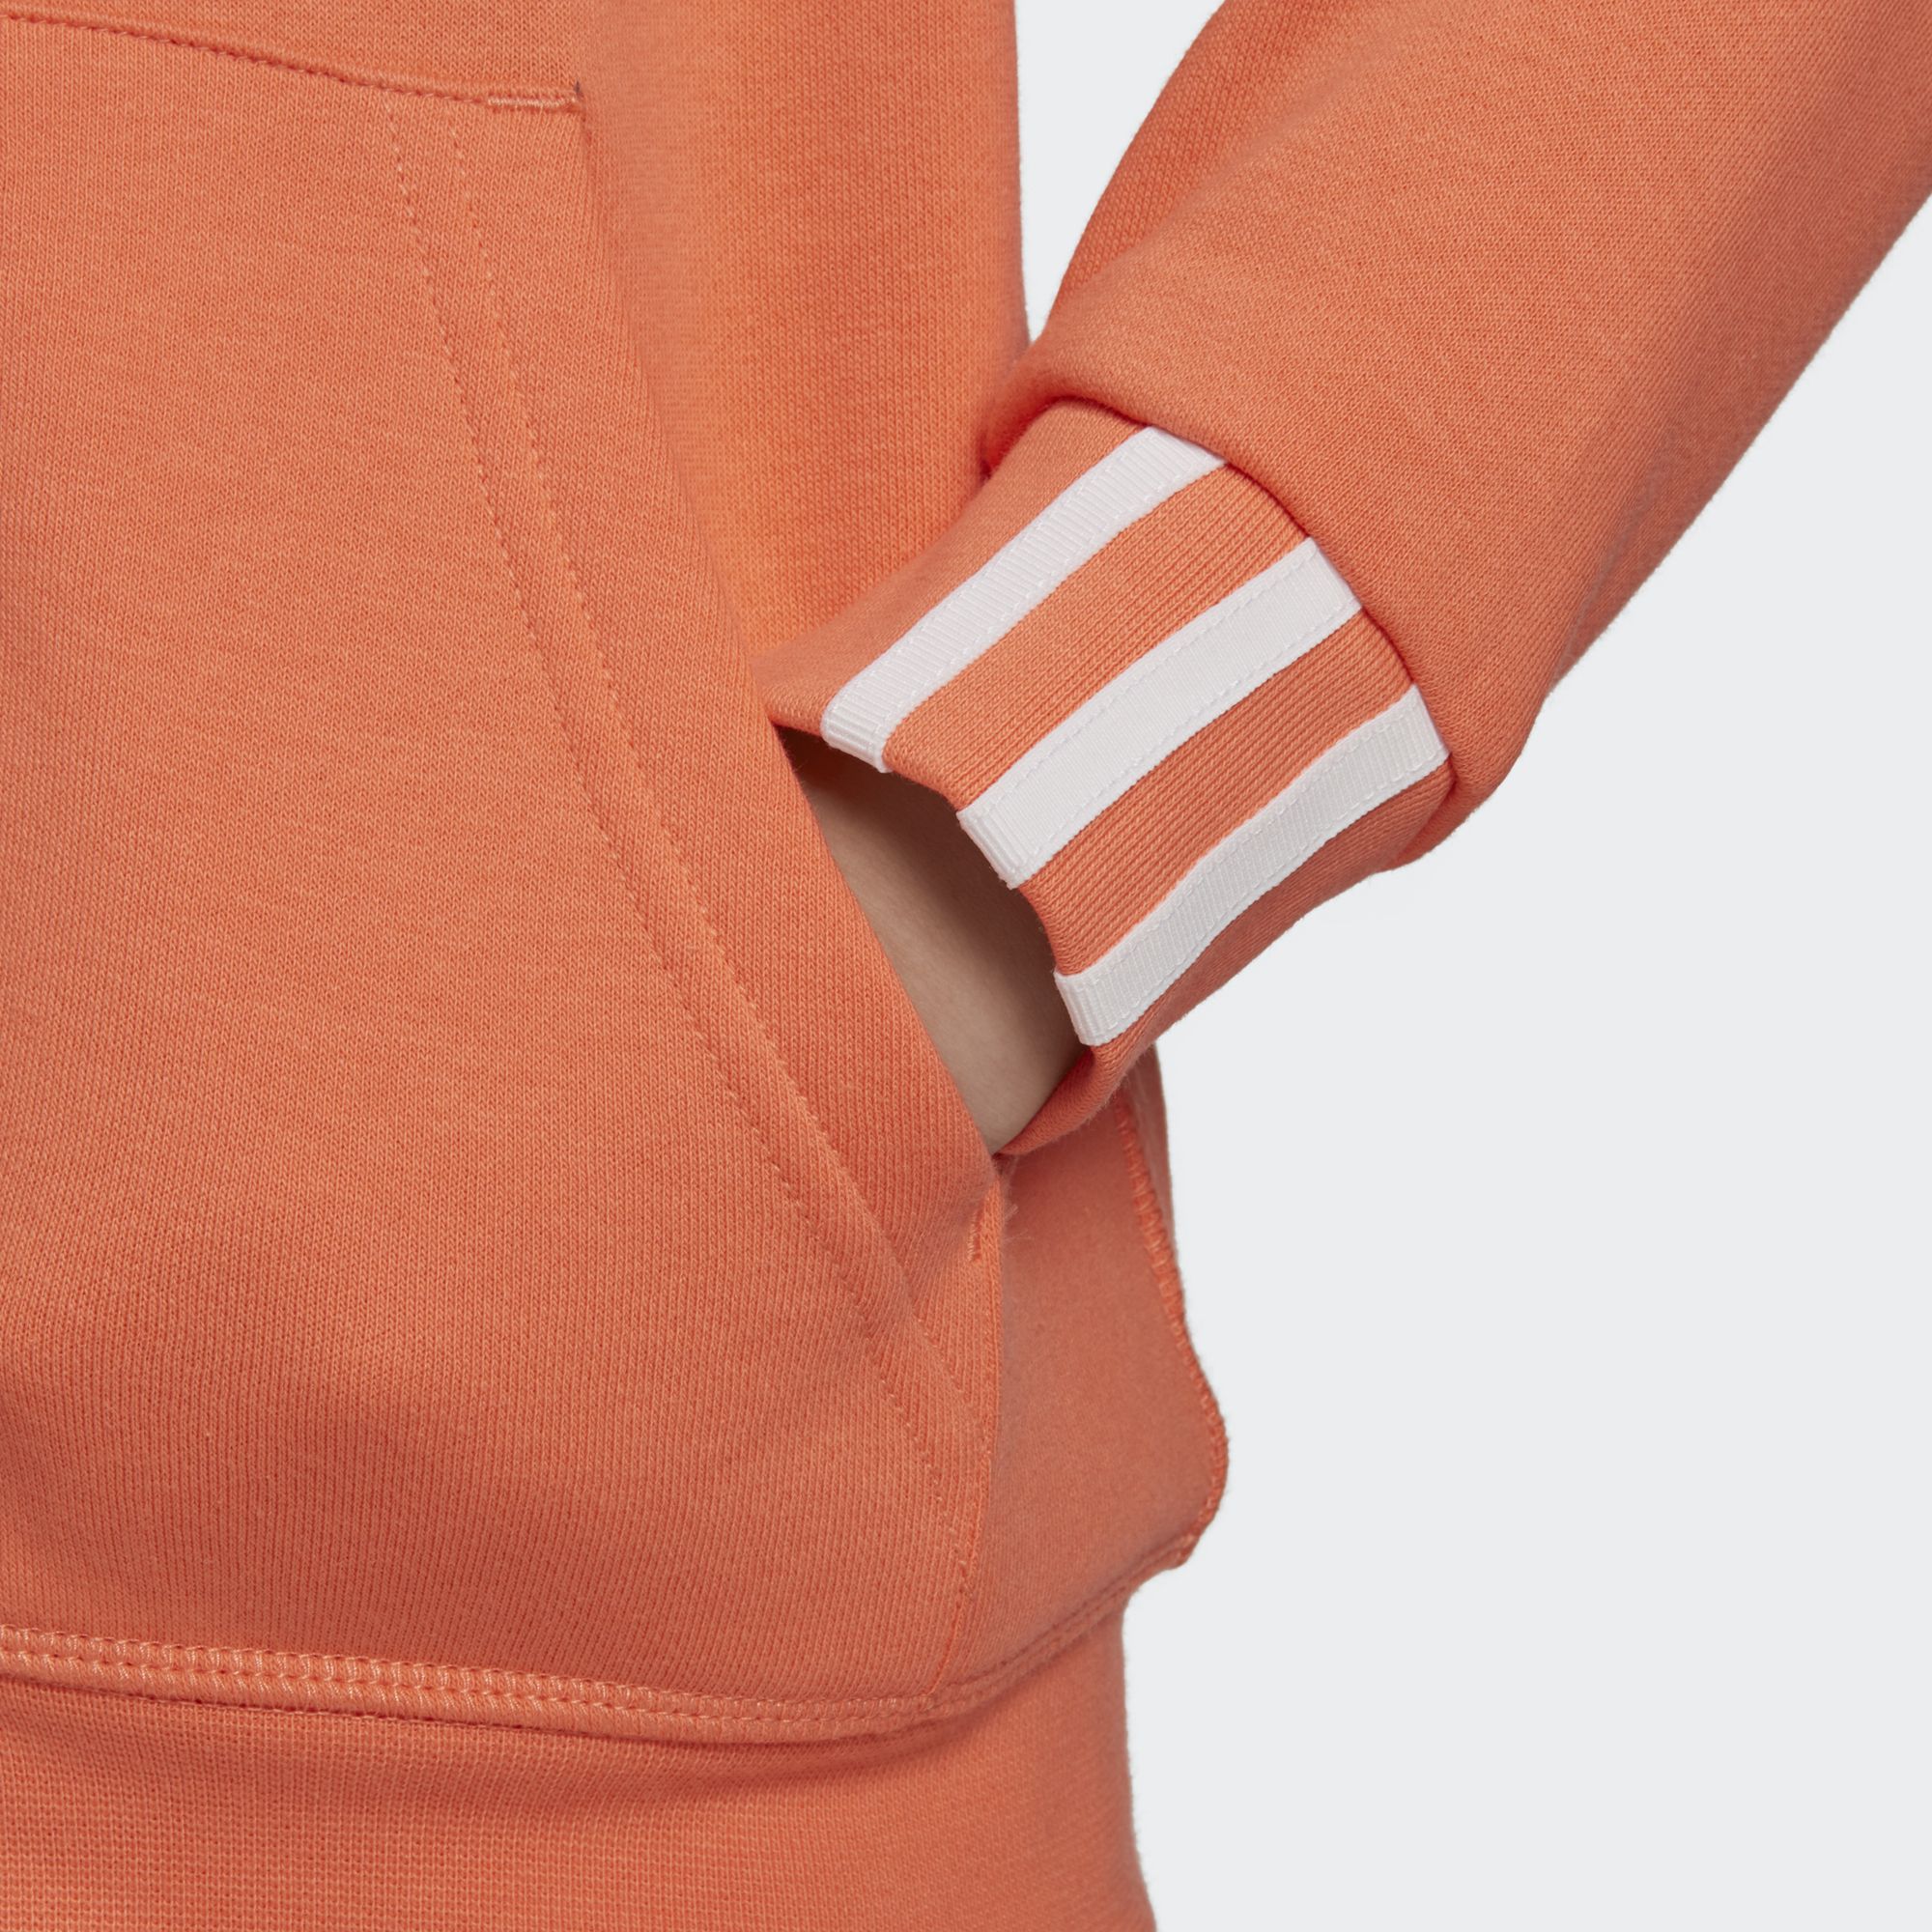 adidas ORIGINALS Bộ quần áo hoodie R.Y.V. Unisex trẻ em Màu hồng ED7780